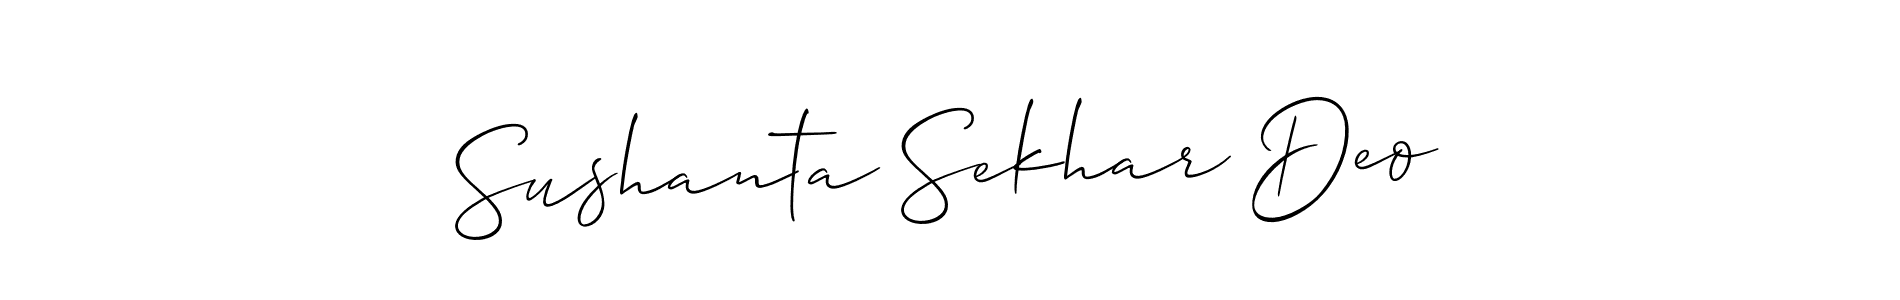 How to Draw Sushanta Sekhar Deo signature style? Allison_Script is a latest design signature styles for name Sushanta Sekhar Deo. Sushanta Sekhar Deo signature style 2 images and pictures png